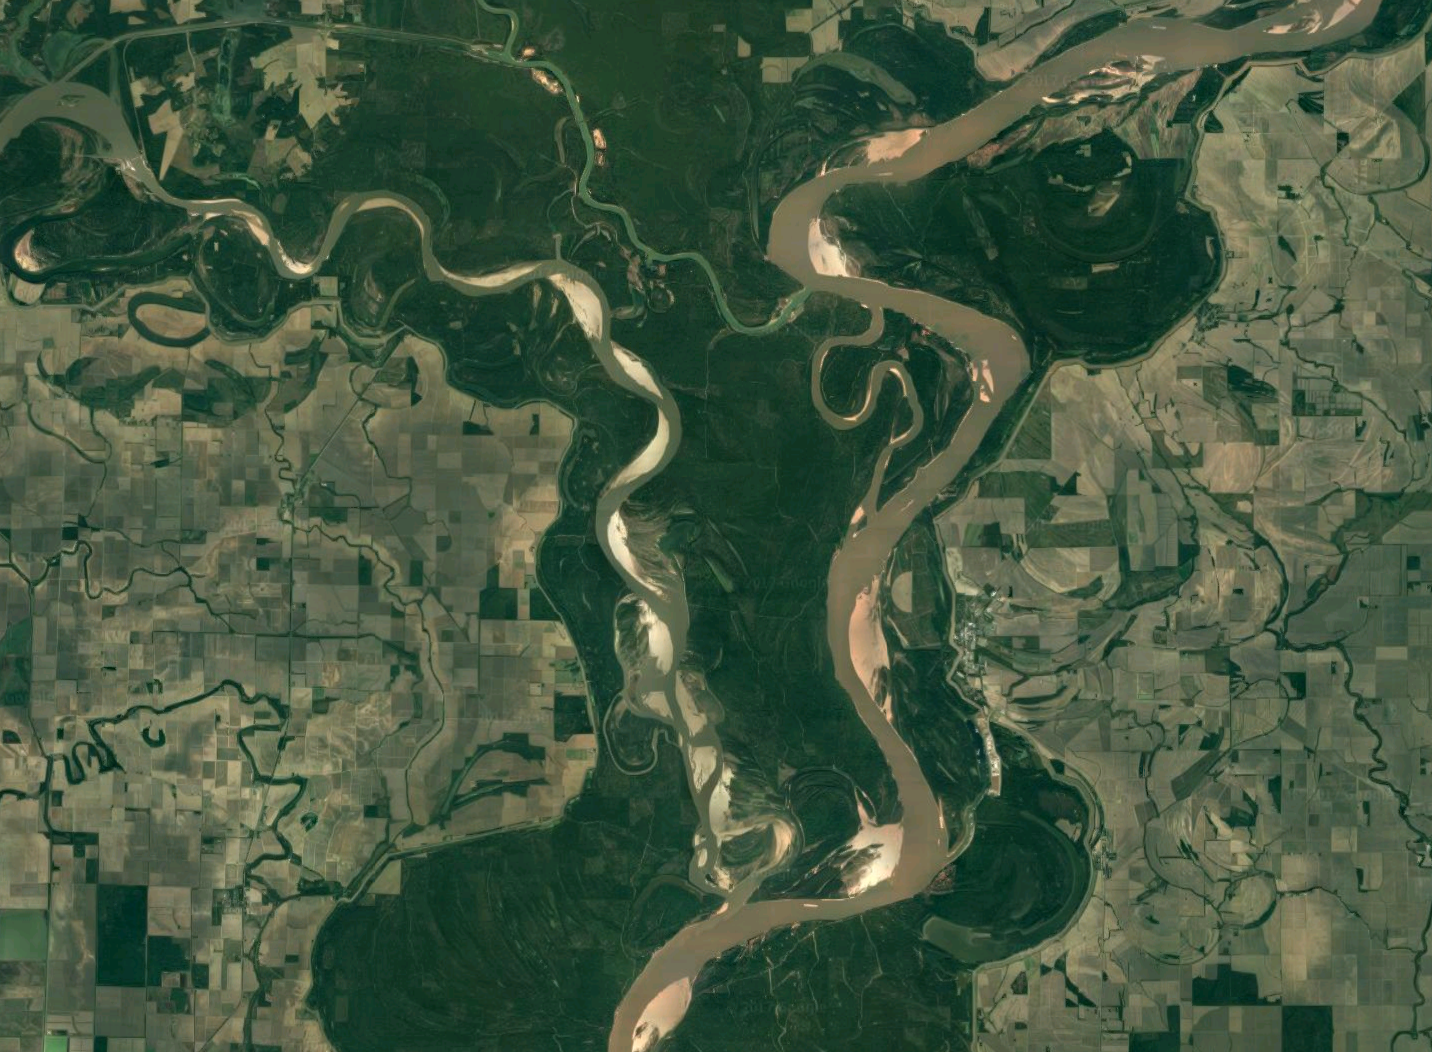 Ariel view of Mid-South Mississippi Delta Region